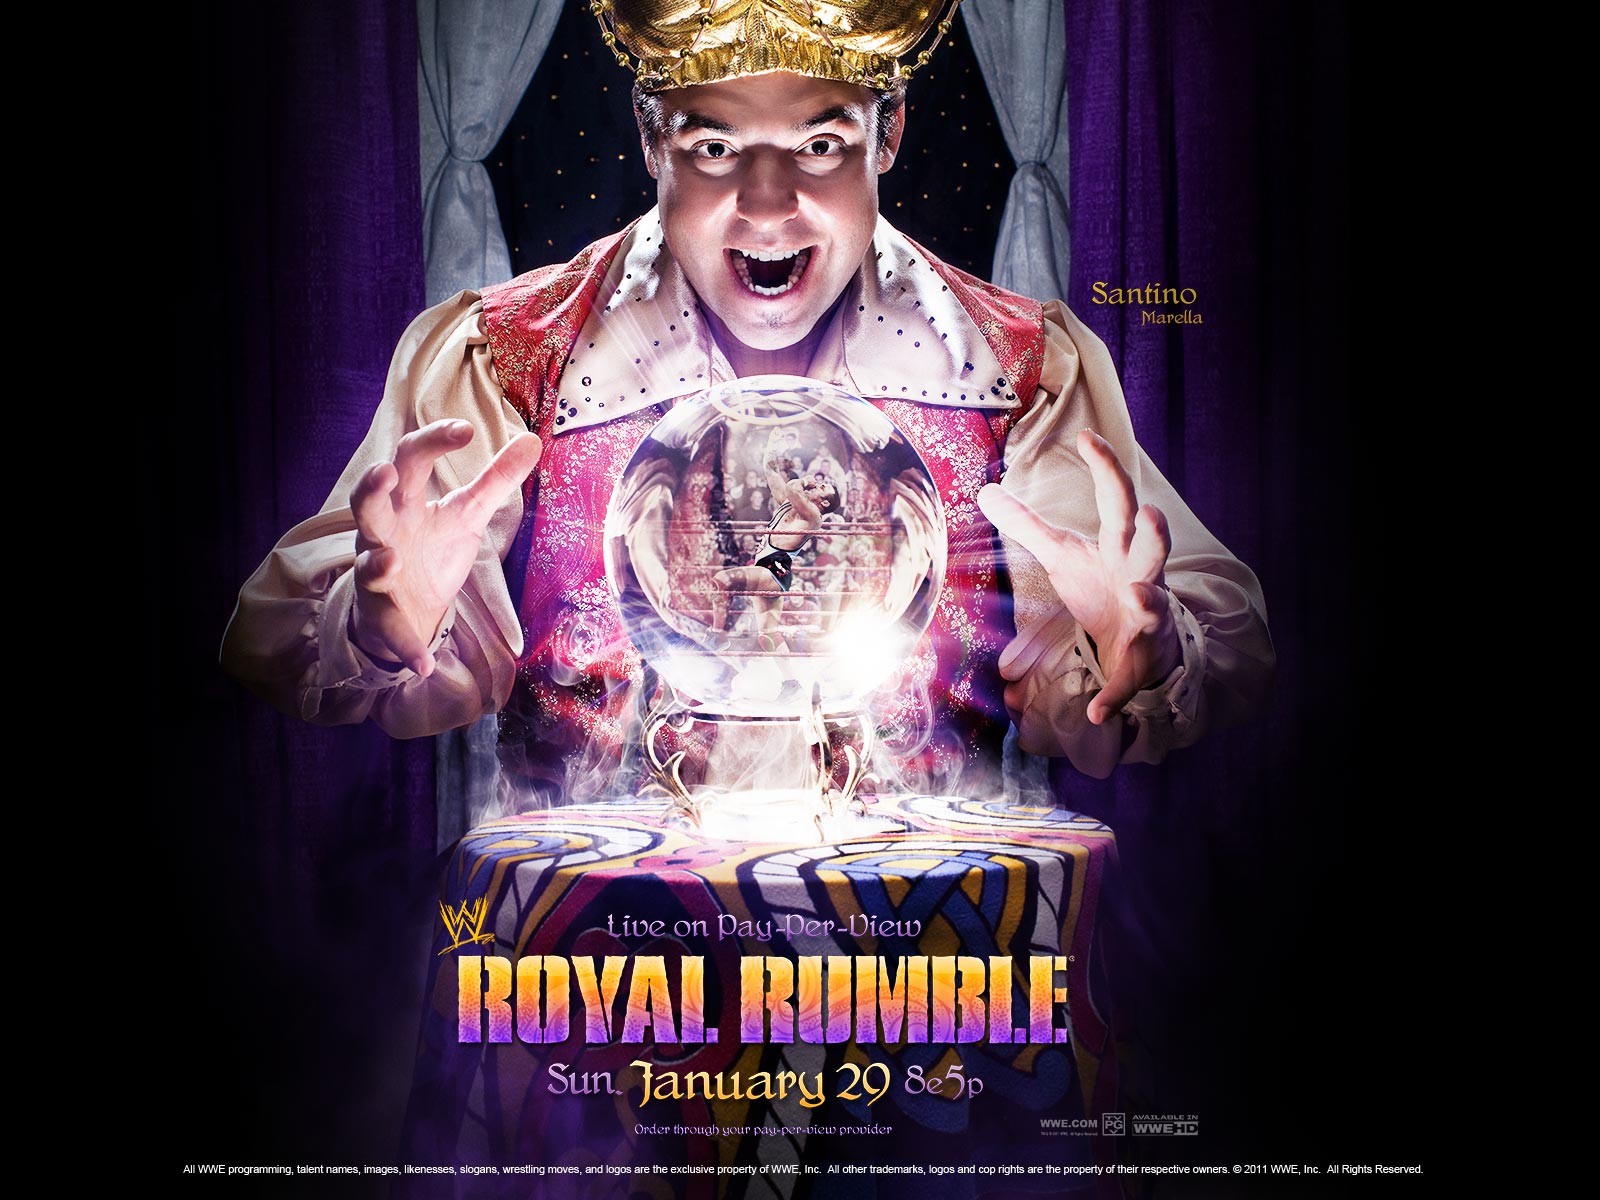 http://3.bp.blogspot.com/-pCrjl-uD5FY/Tw6w_97NOYI/AAAAAAAAAB0/-PWIdVDdhH4/s1600/royal-rumble-royal-rumble+2012%252C+royal-rumble+2012+Video-royal-rumble2012+wallpaper-.jpg